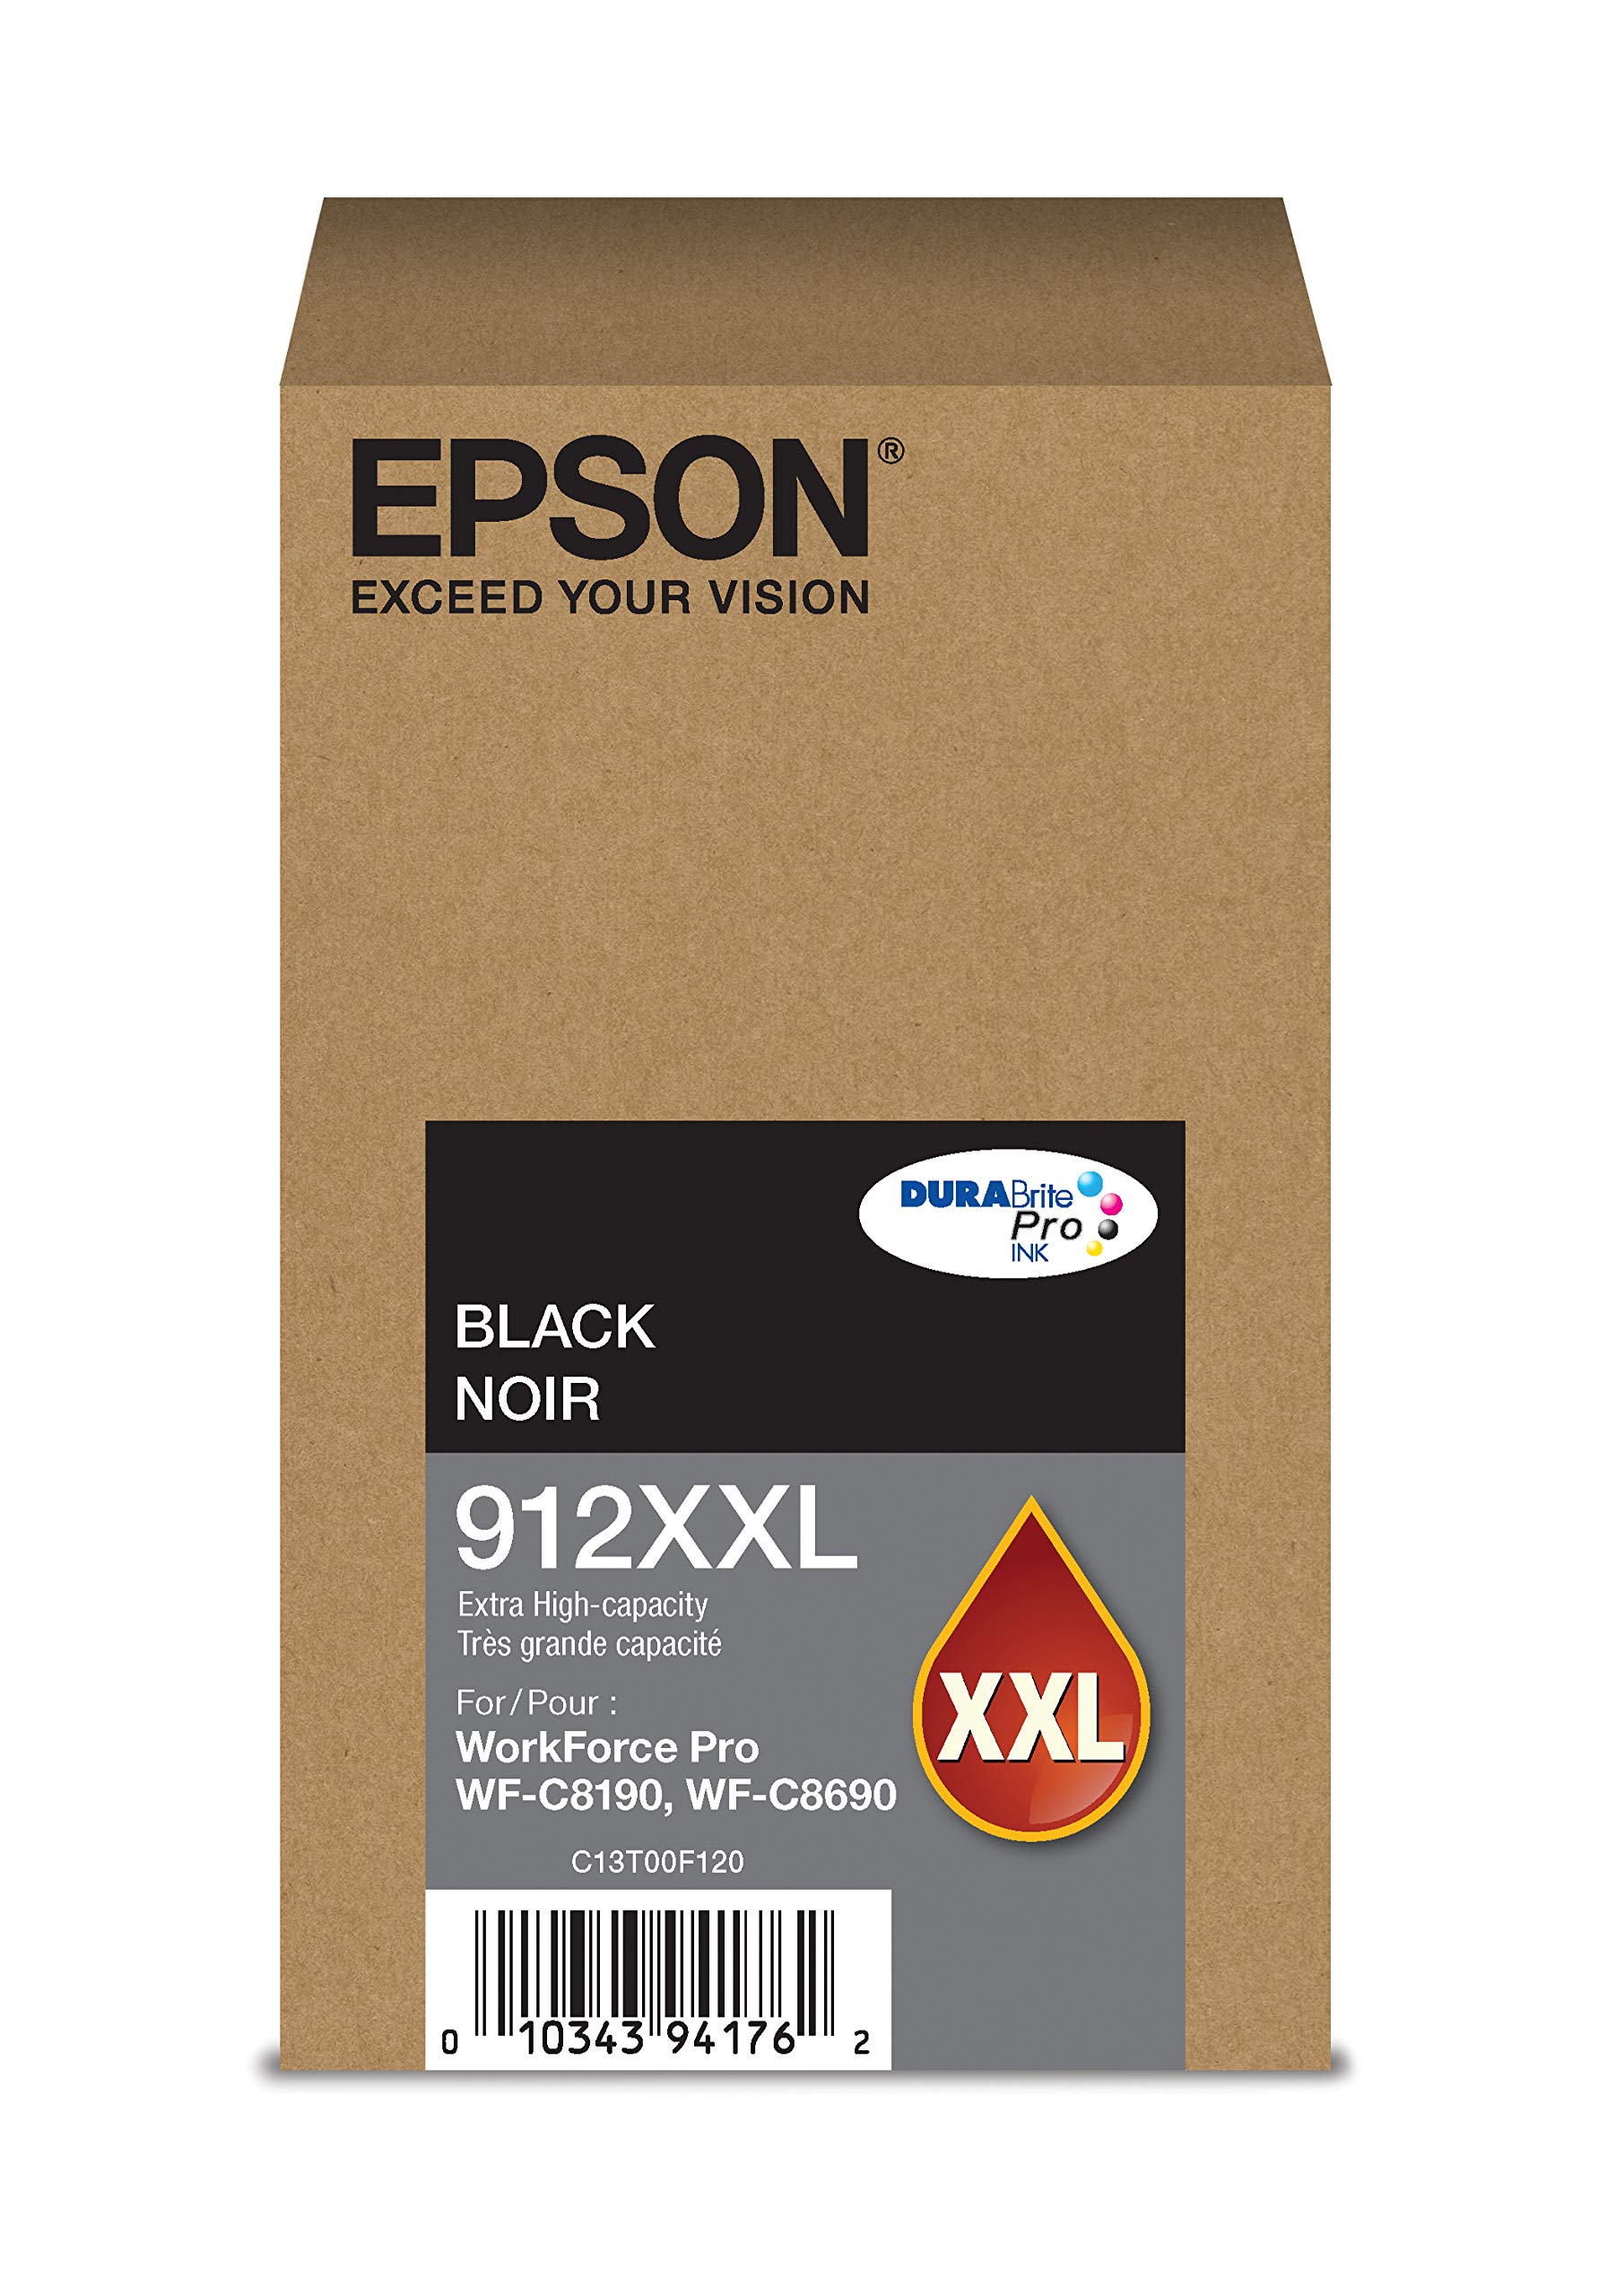 Epson DURABrite Pro T912XXL120 -잉크 -카트리지 - 초대용량 블랙...